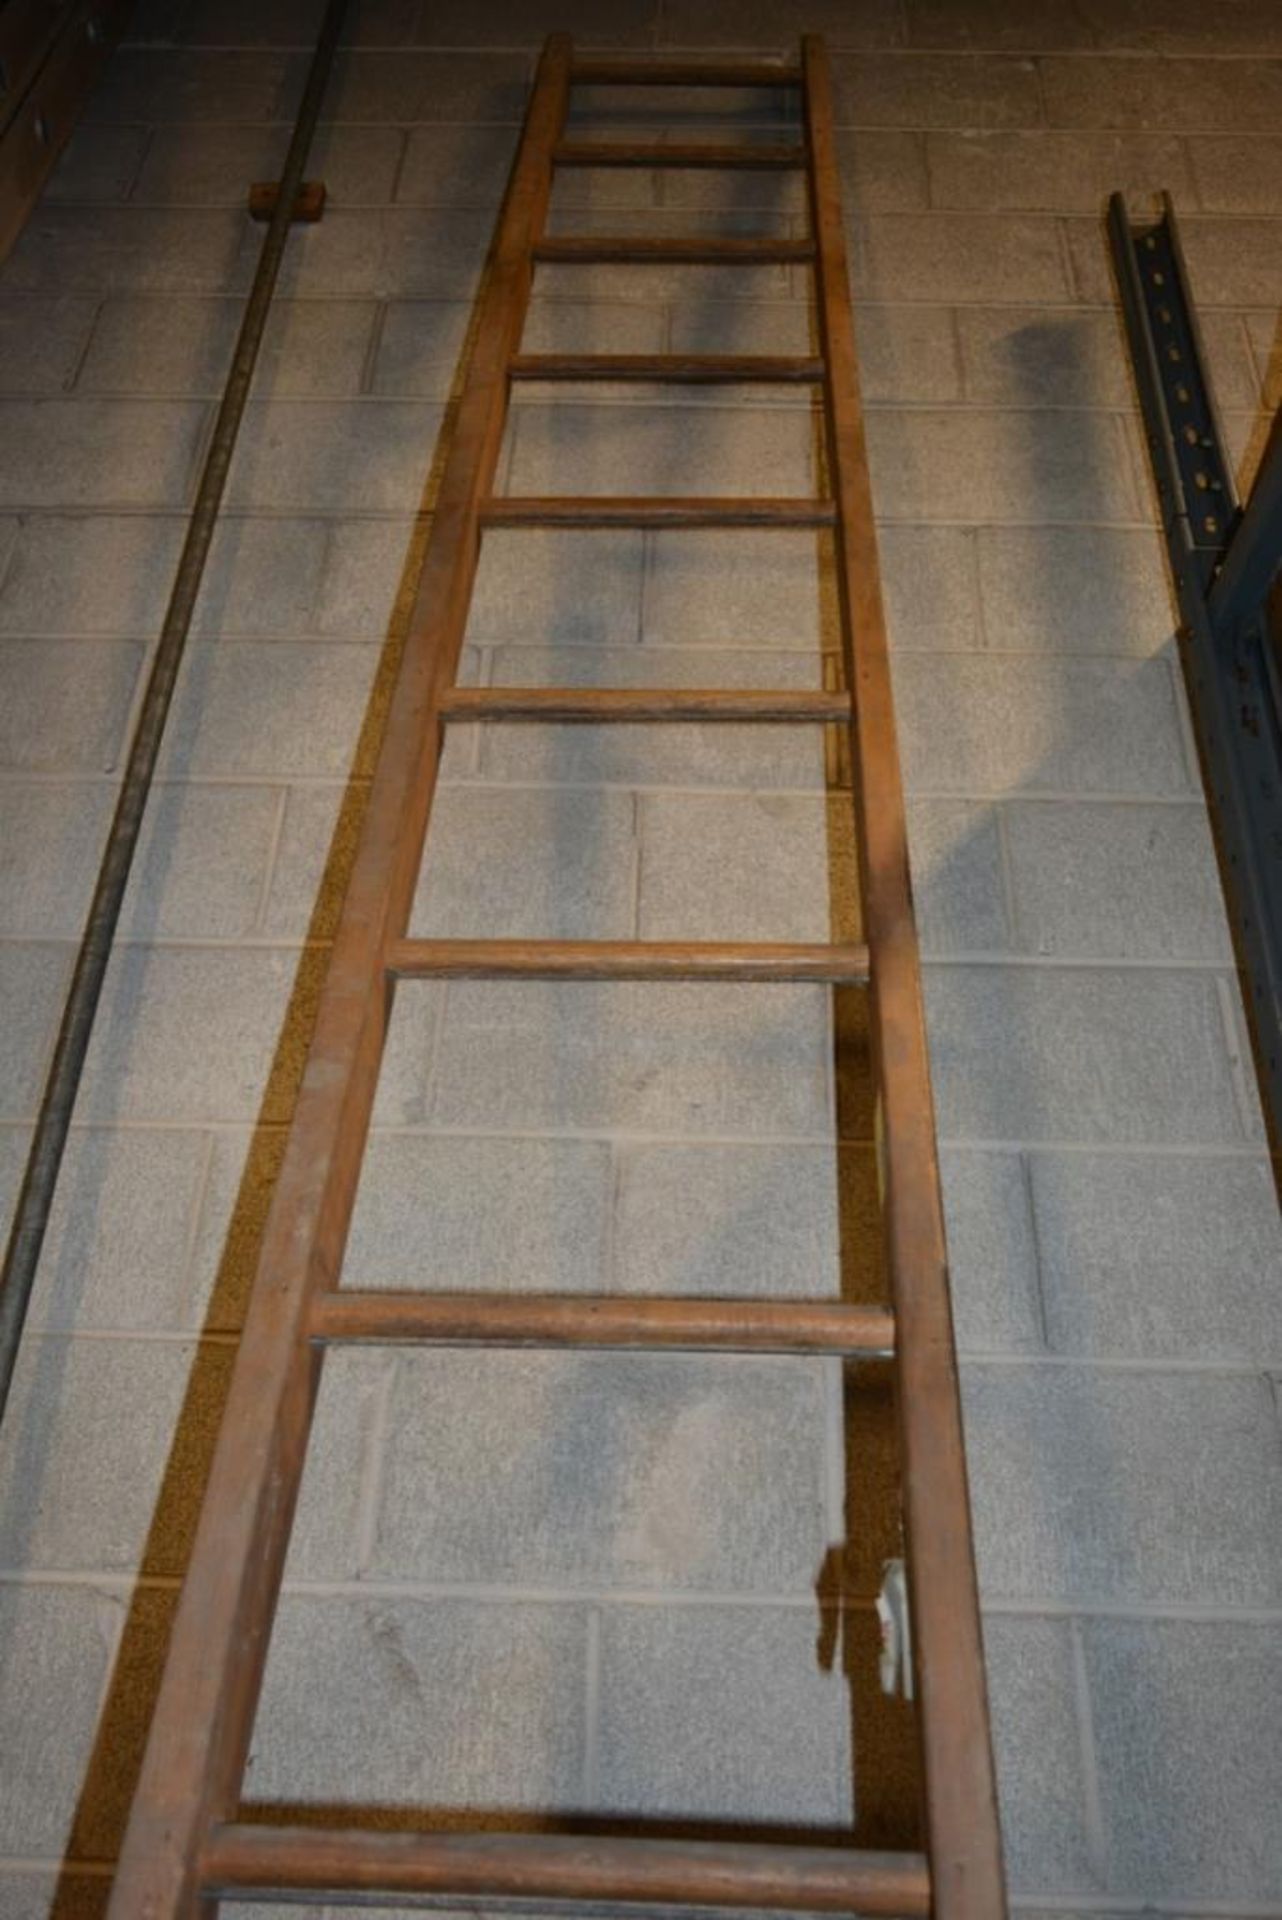 Watling No. 1 Single 12' Wood Straight Ladder - Image 3 of 3